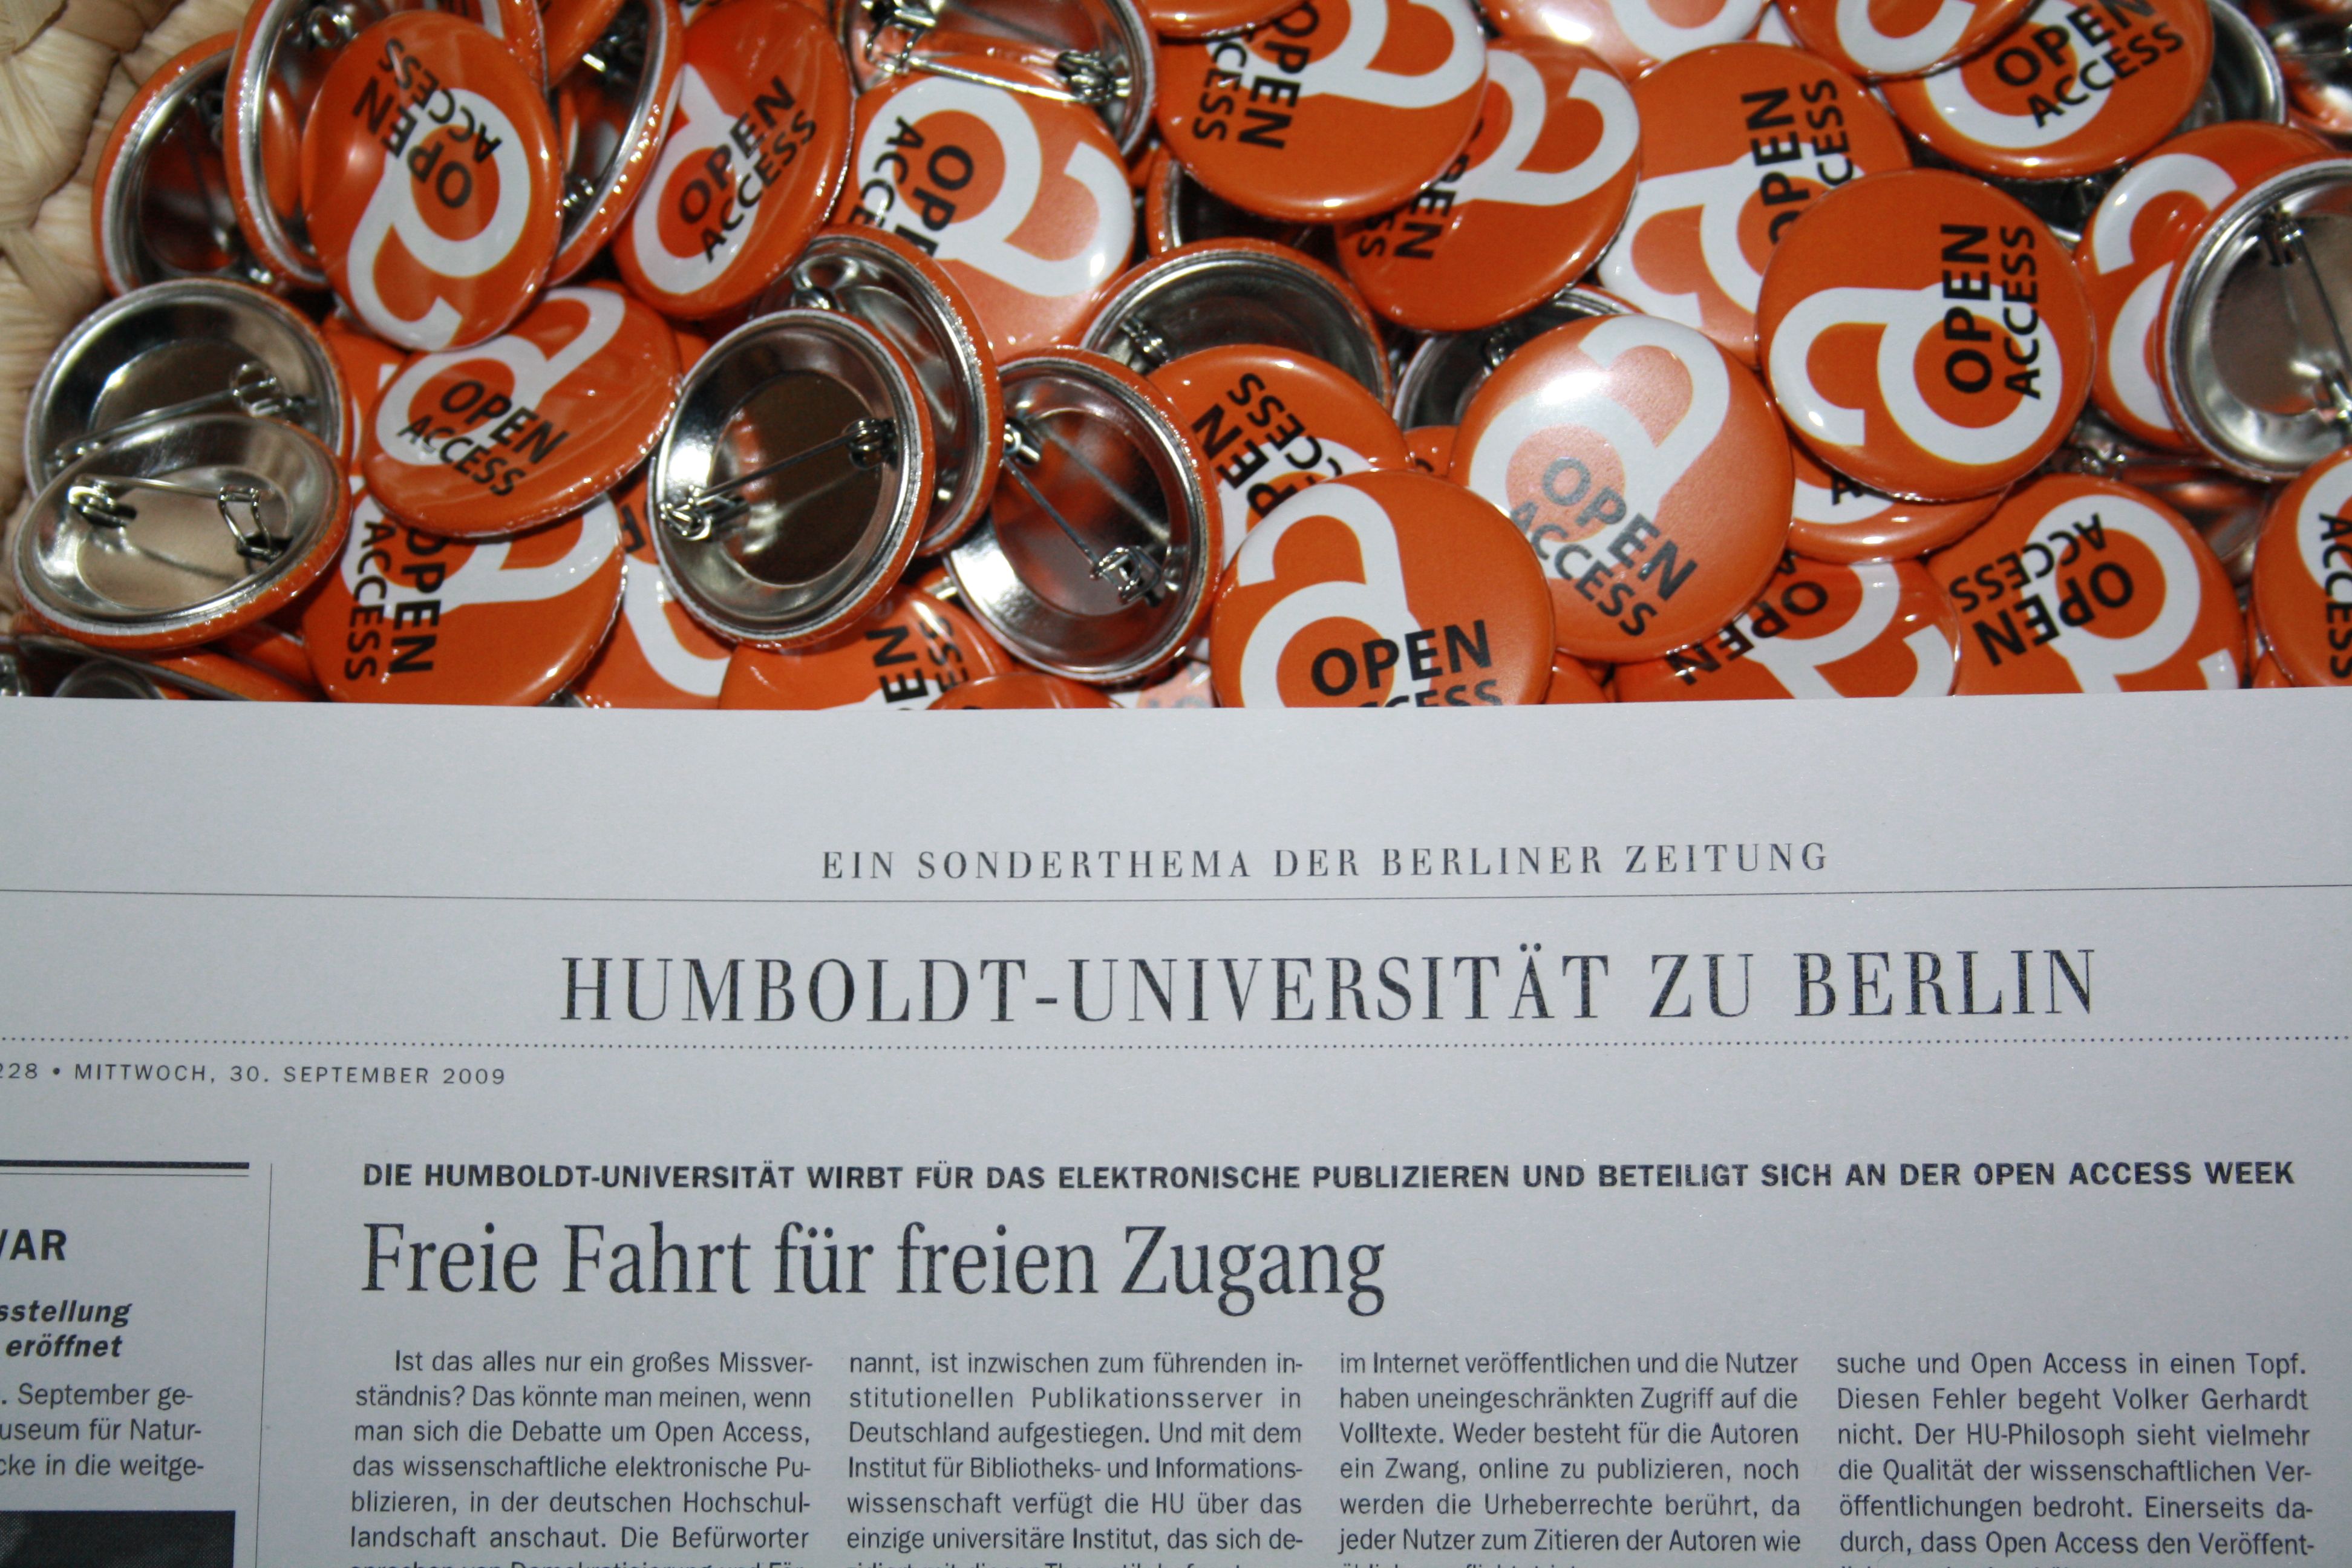 "Open Access an der Humboldt-Universität" - in der Berliner Zeitung